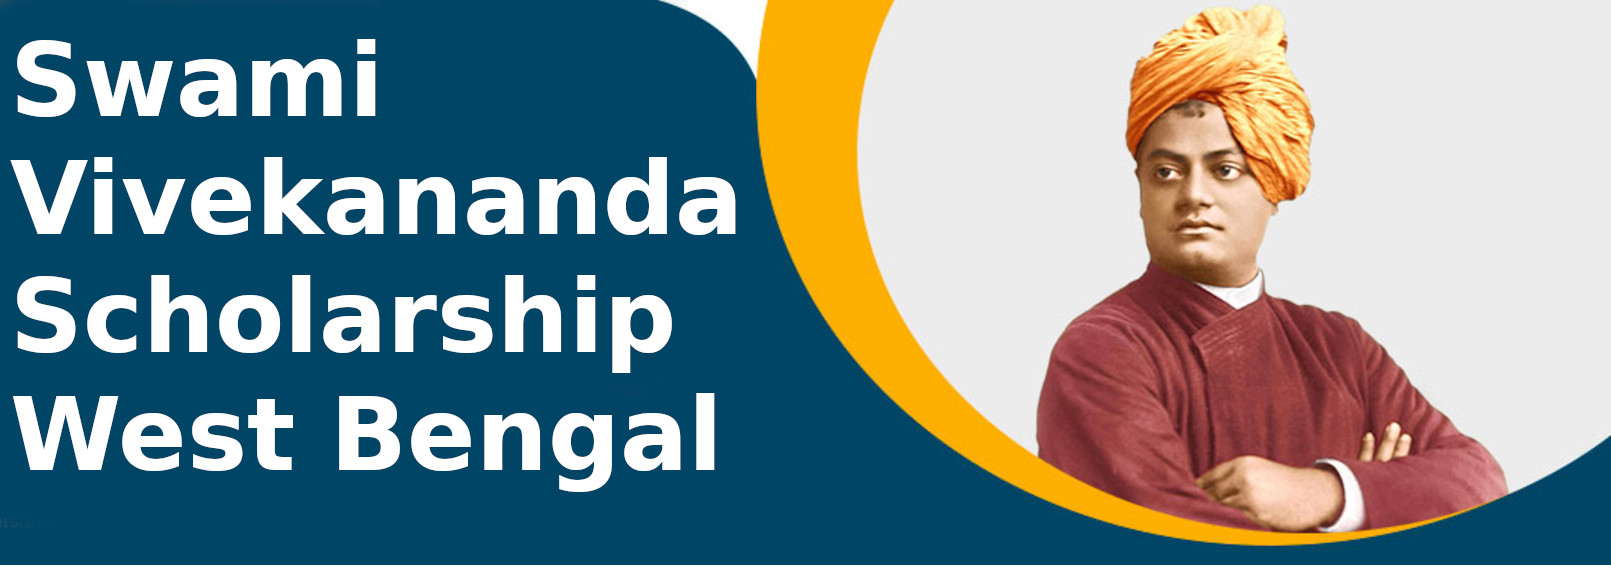 Swami Vivekananda Scholarship, West Bengal - IndCareer Scholarships